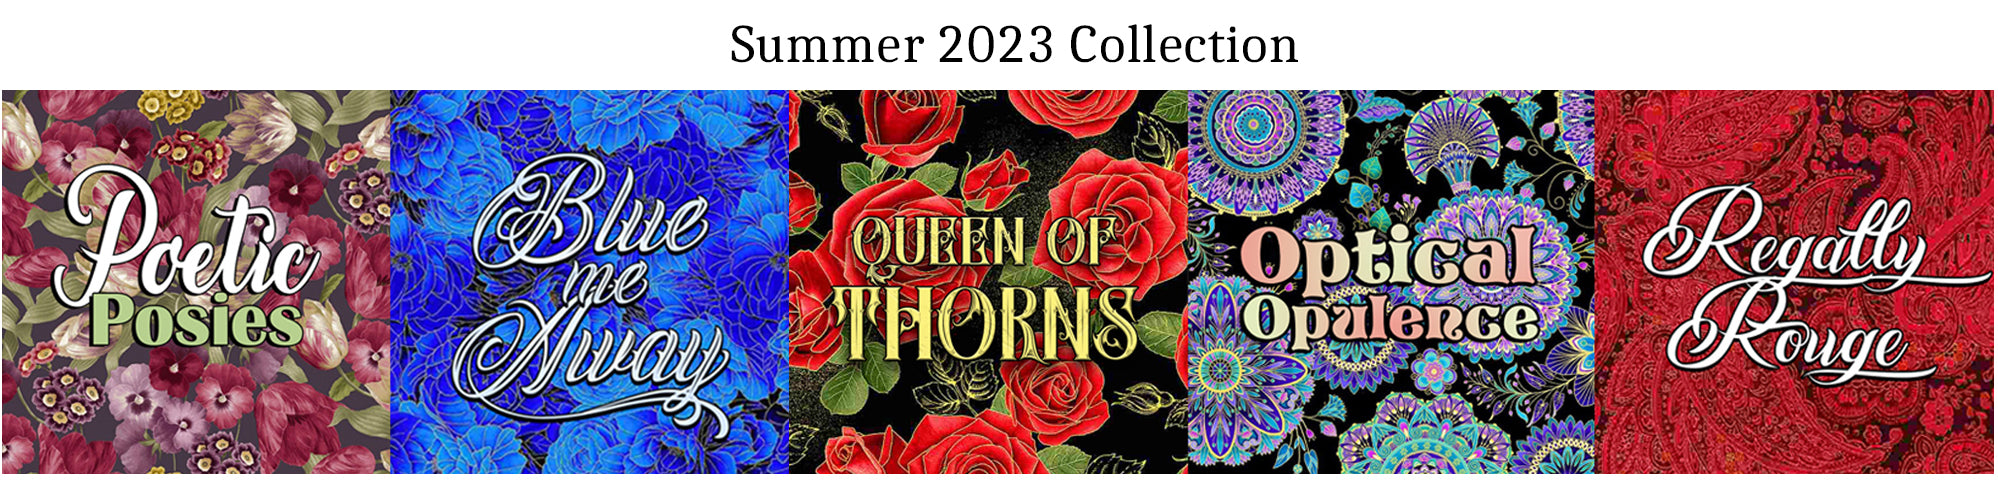 Summer 2023 Diane dress collection